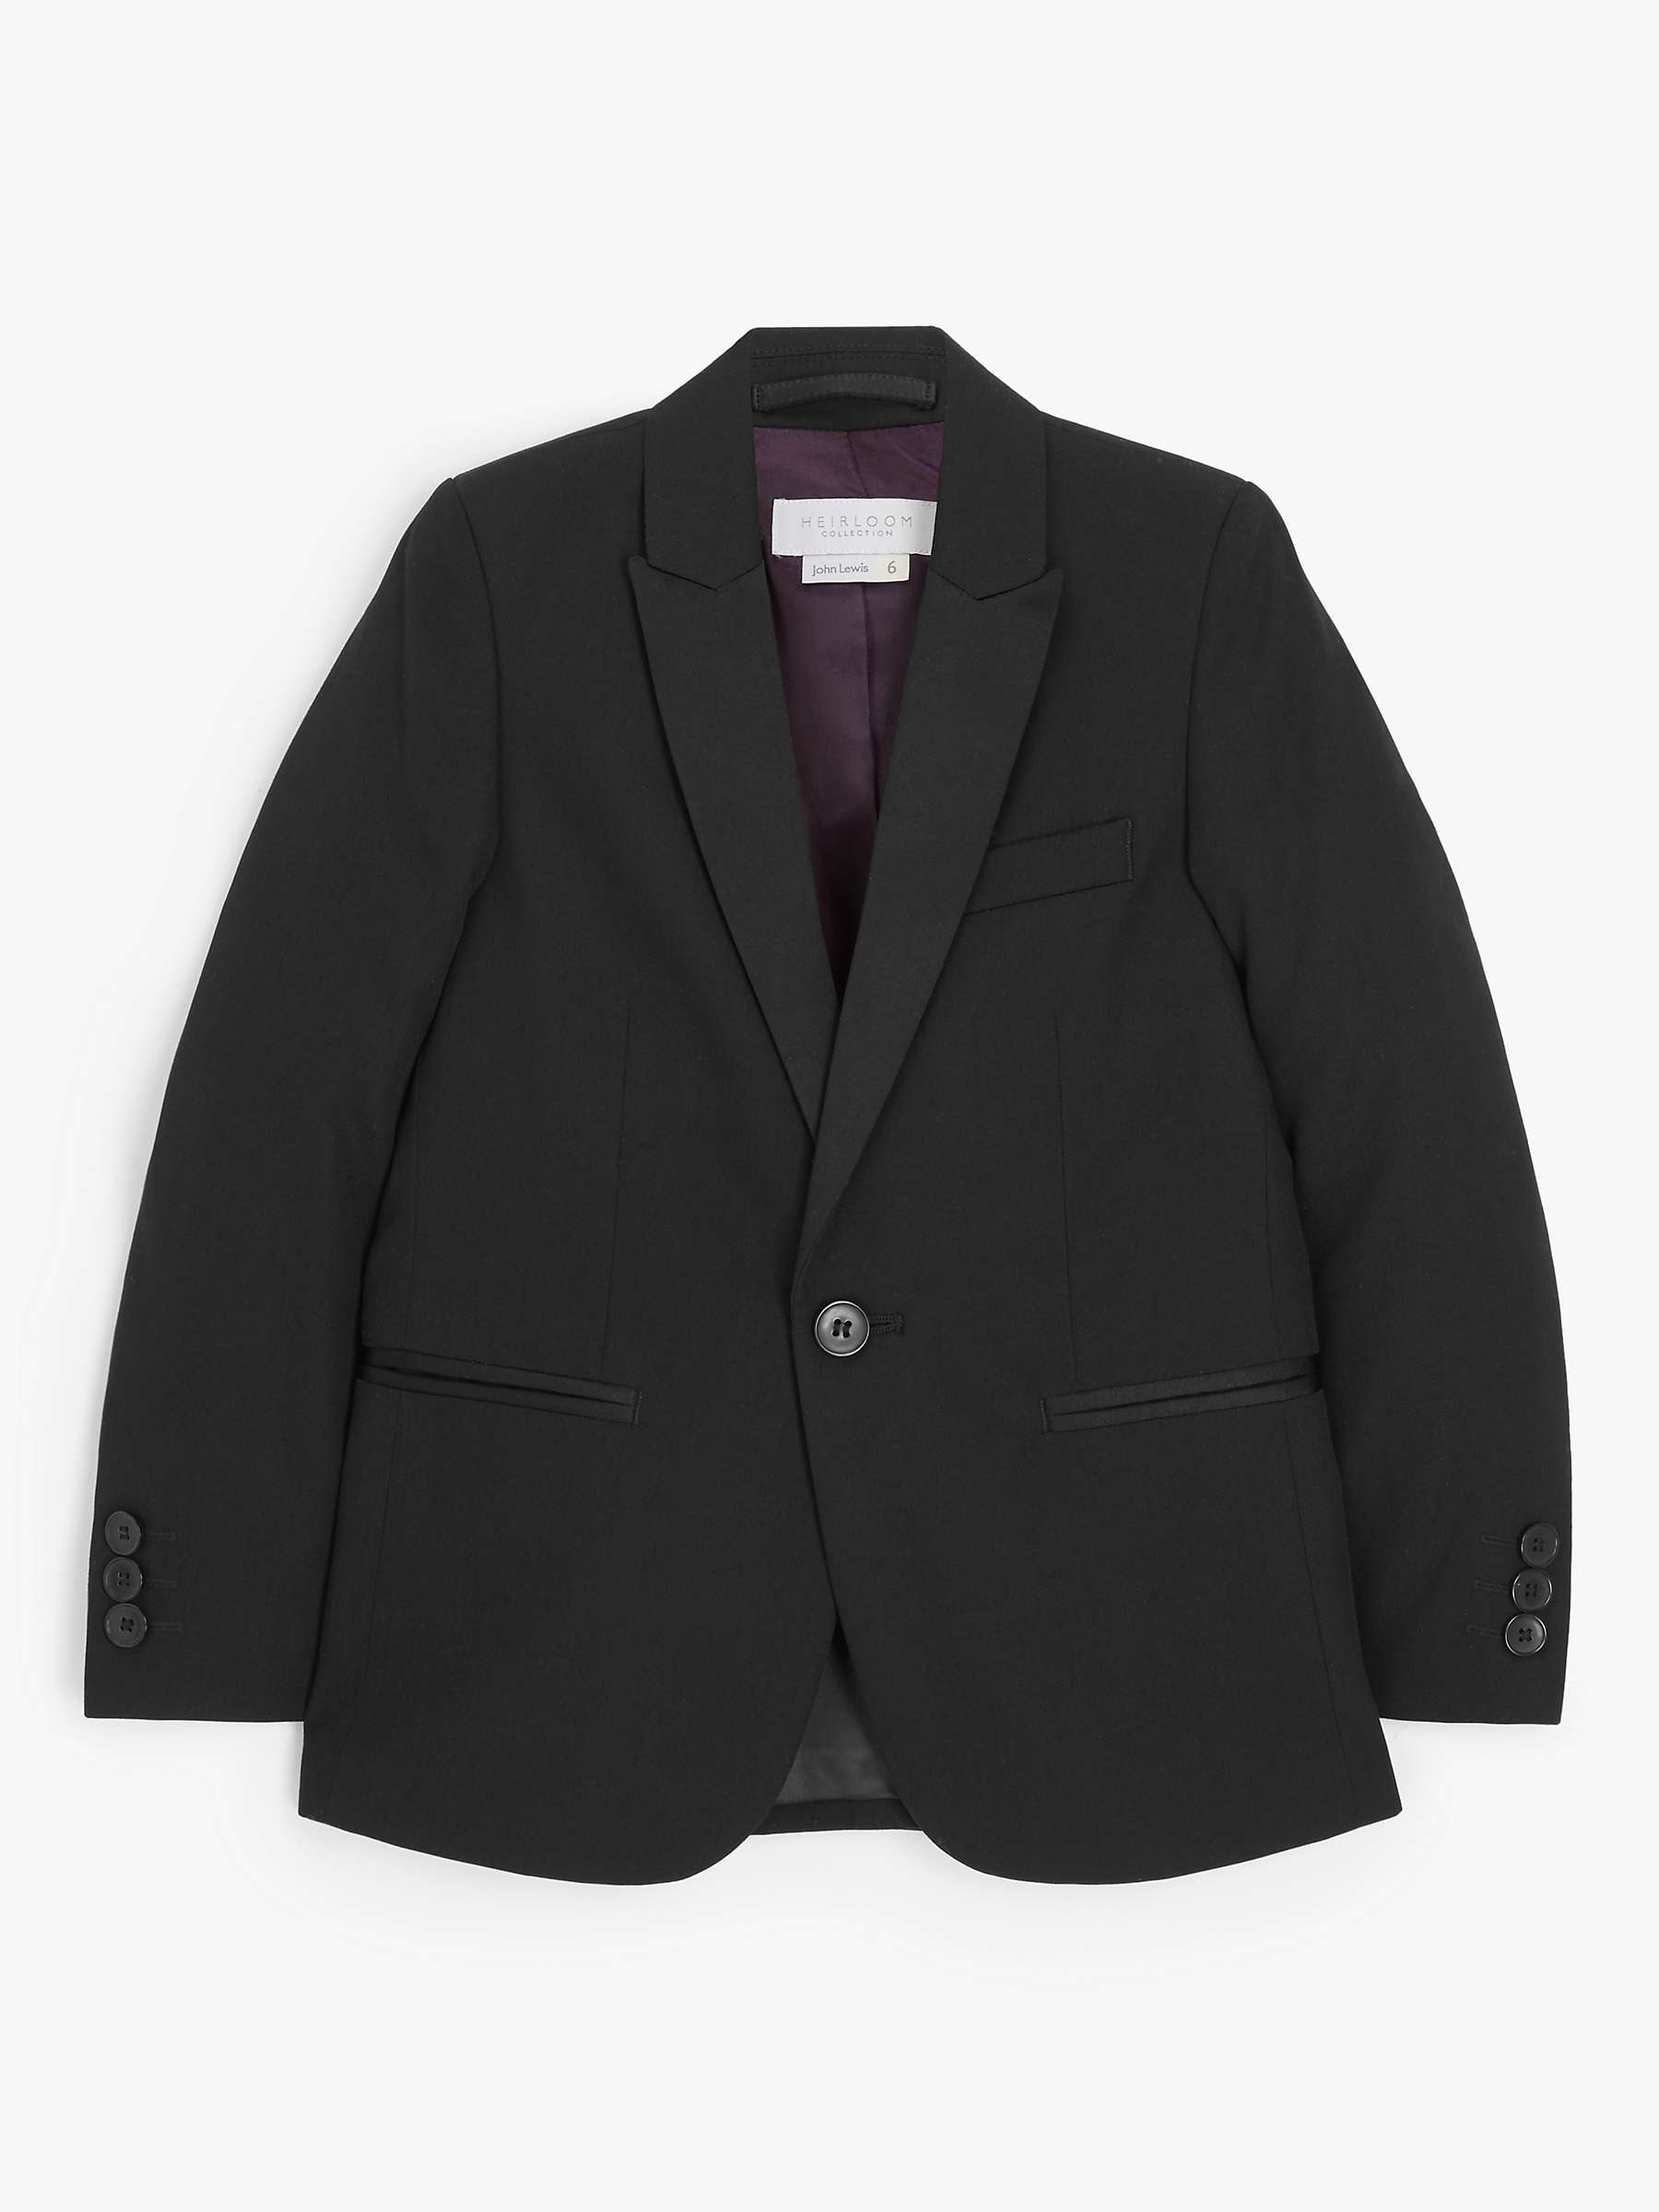 Age 11 RRP £43 New John Lewis Heirloom Boys Tuxedo Suit Jacket Black 